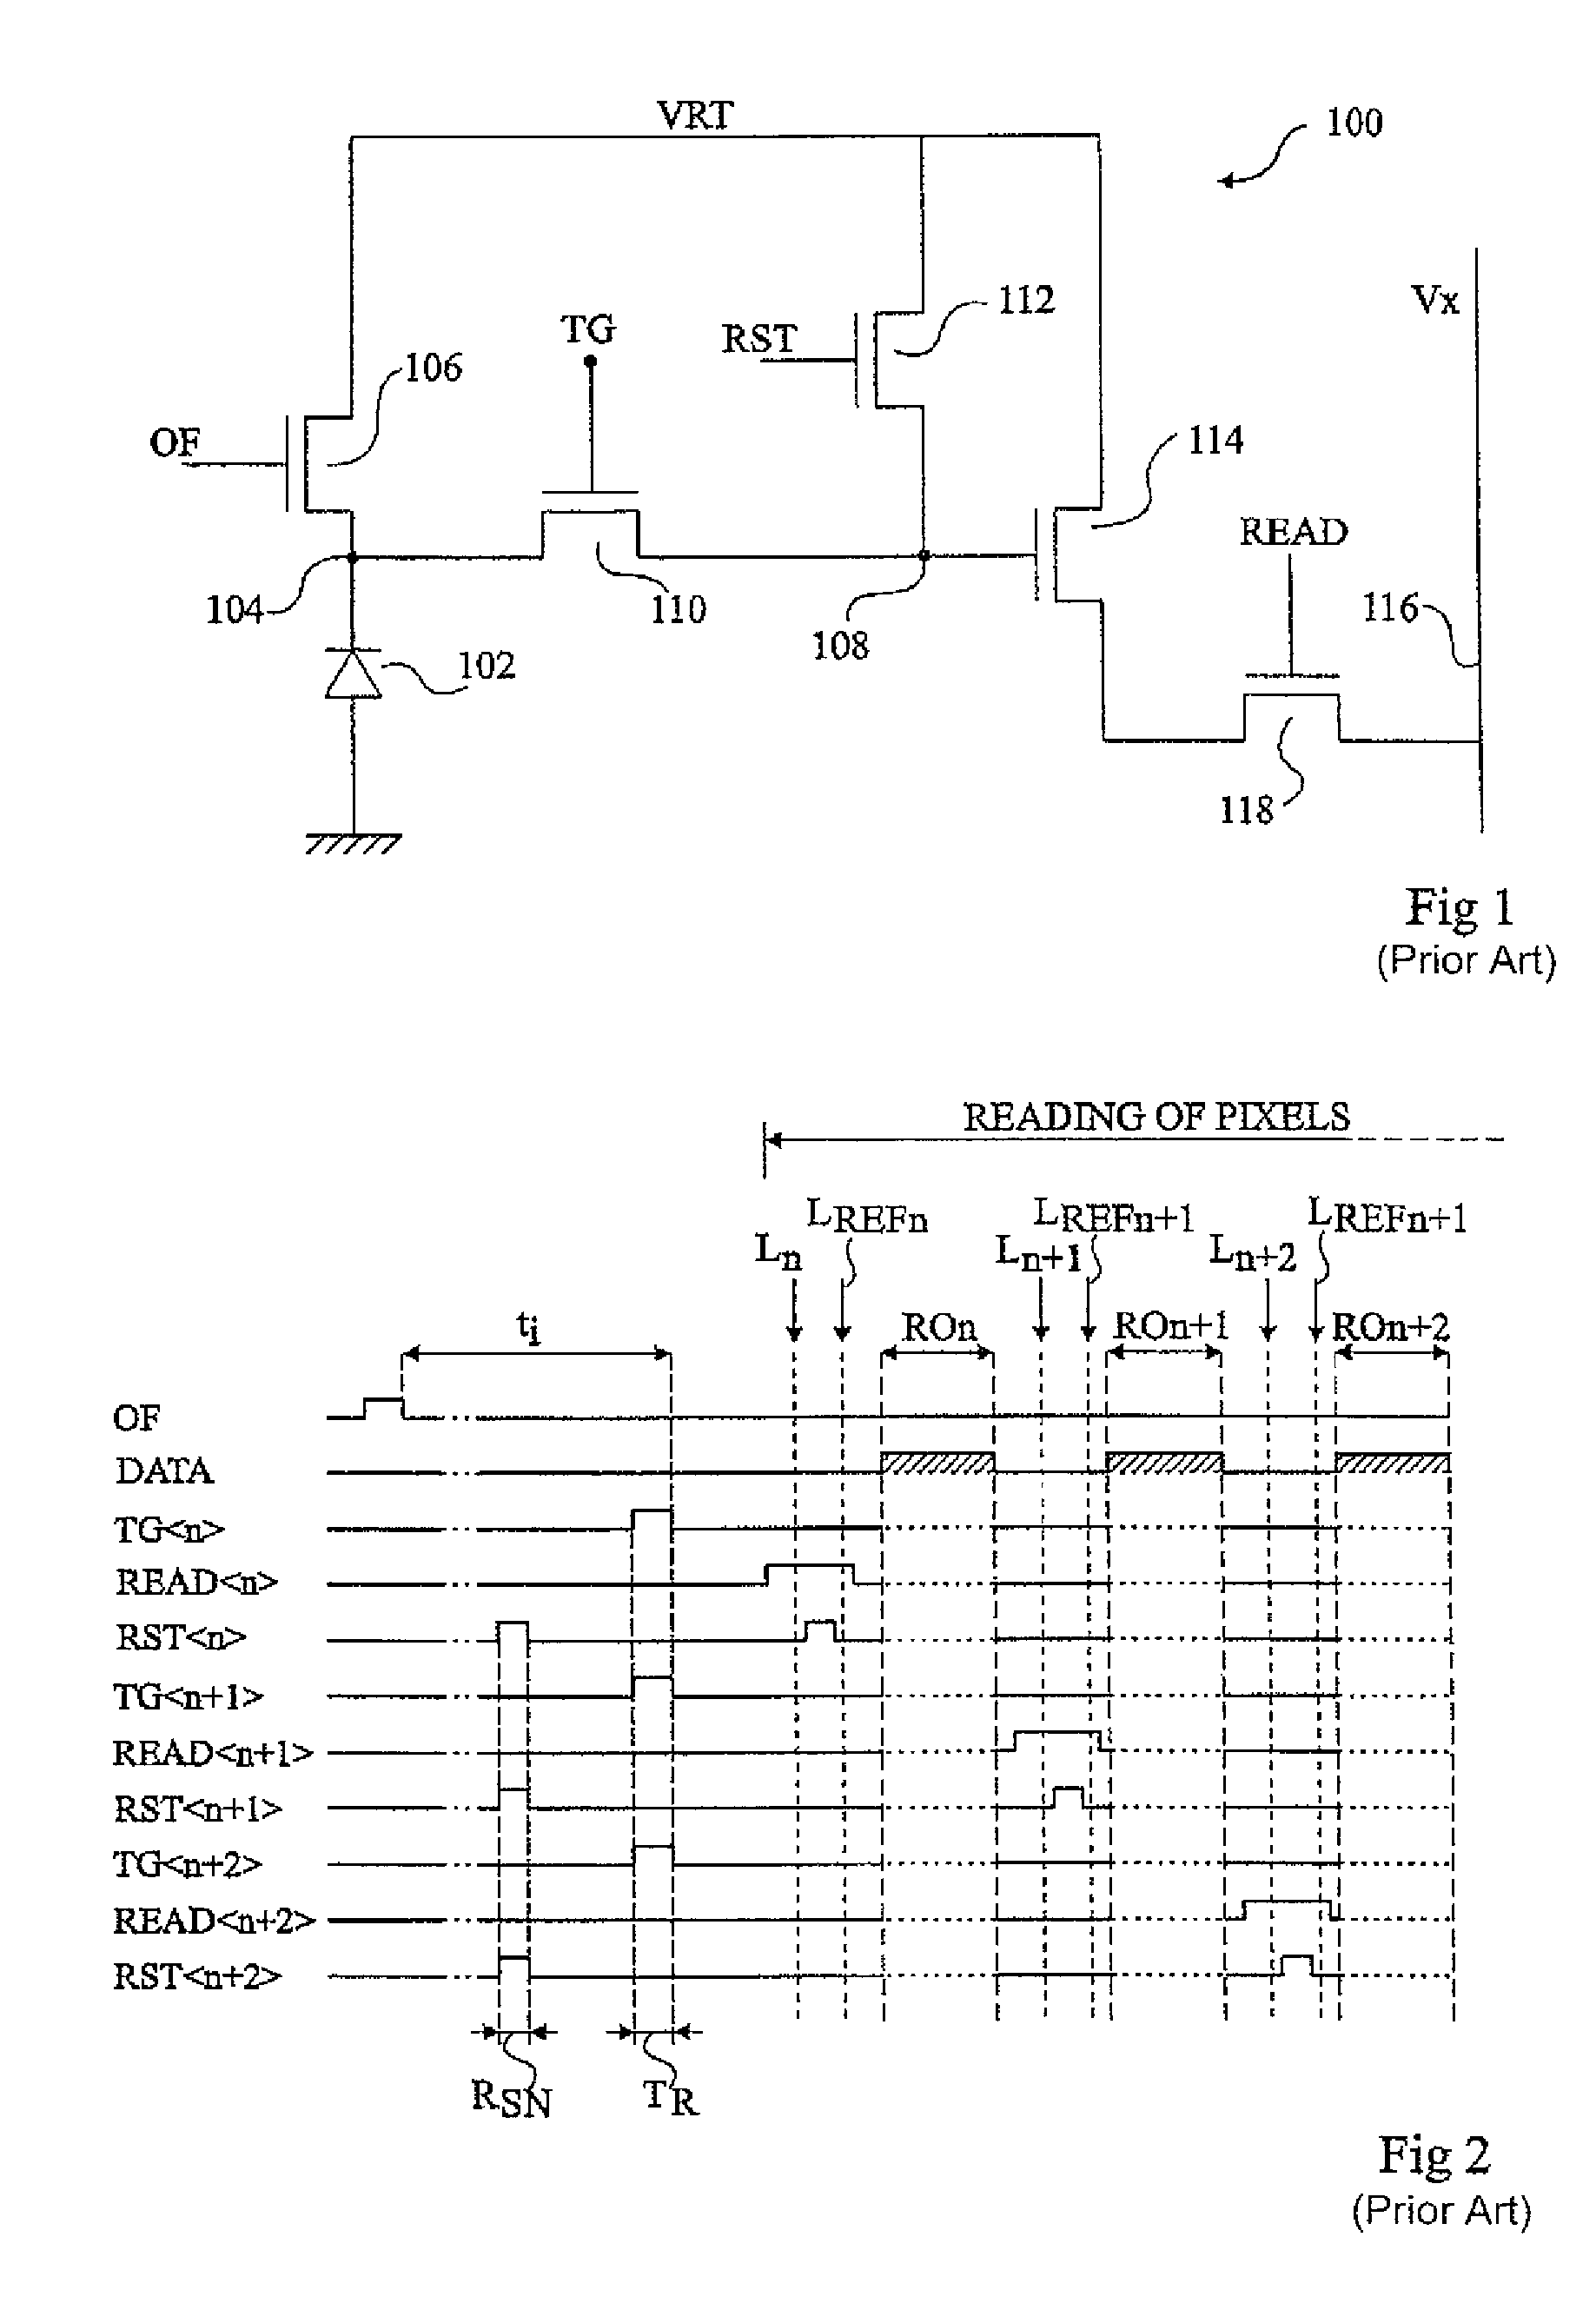 Pixel circuit for global electronic shutter